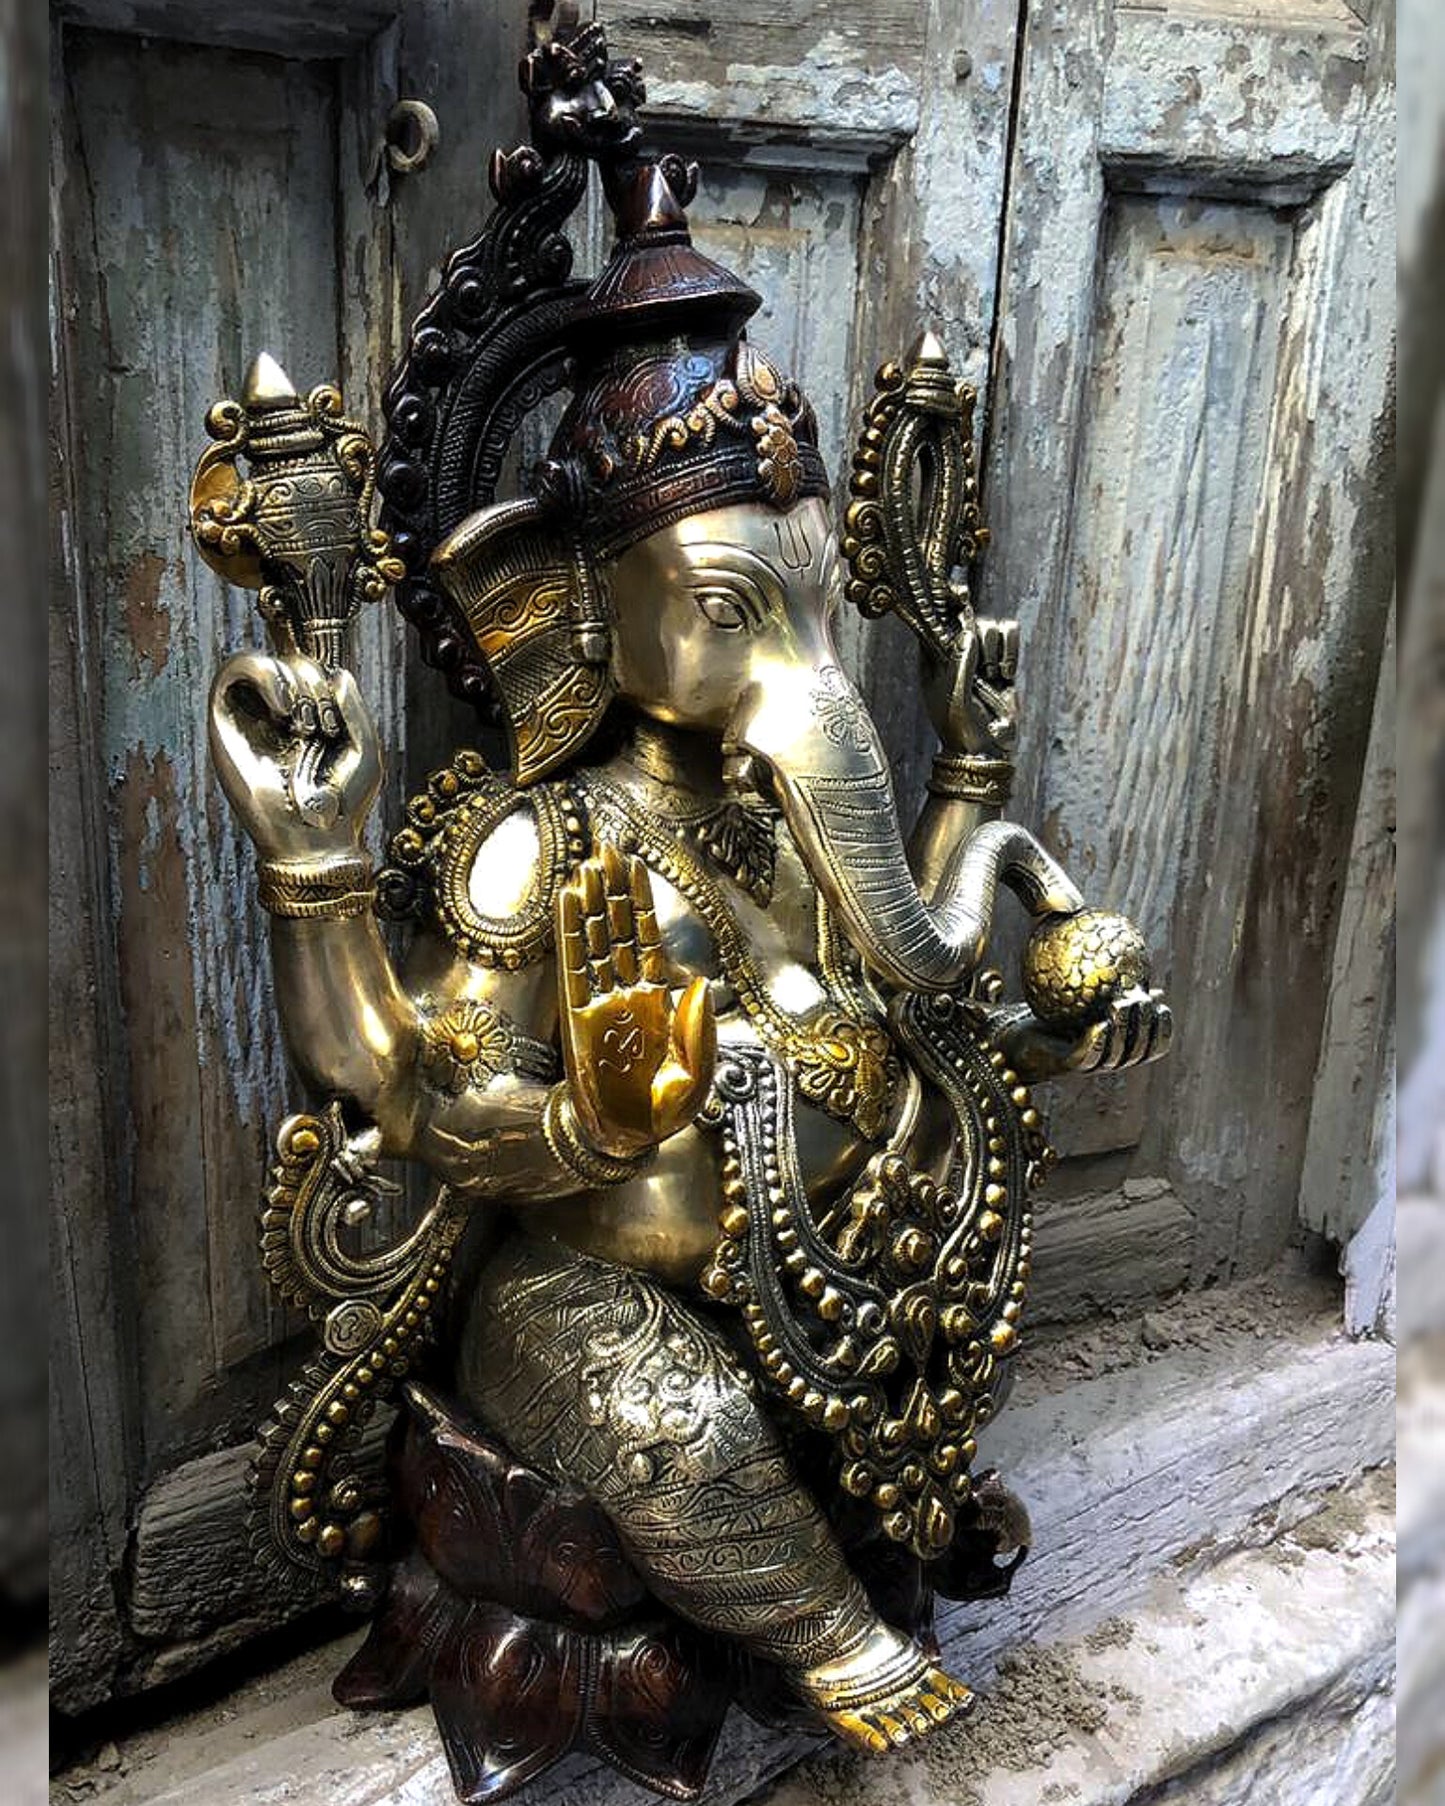 Ganesha Brass Idol 21 inches high seated on a lotus base